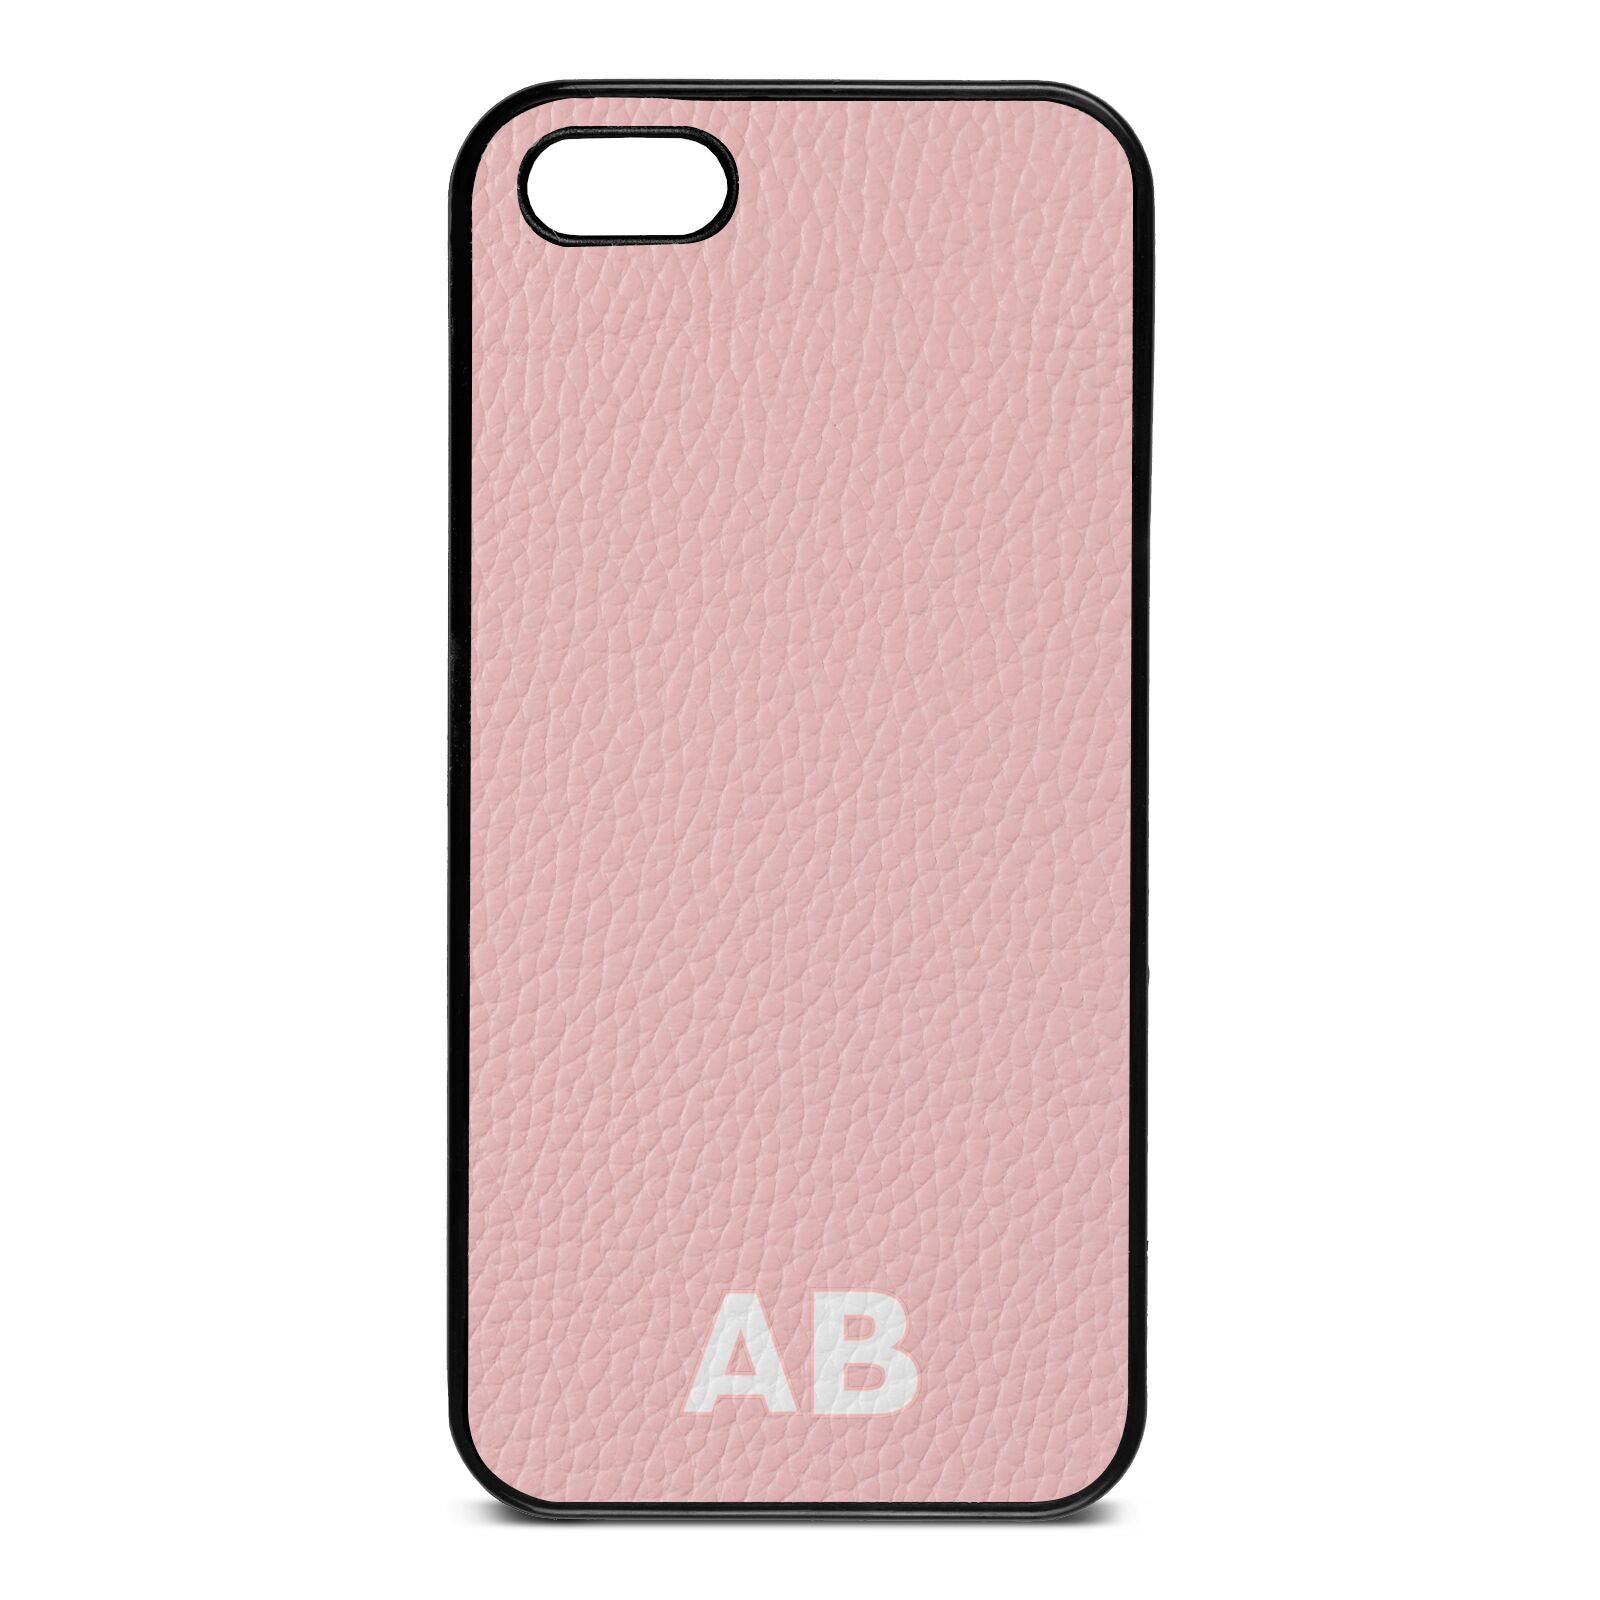 Sans Serif Initials Pink Pebble Leather iPhone 5 Case